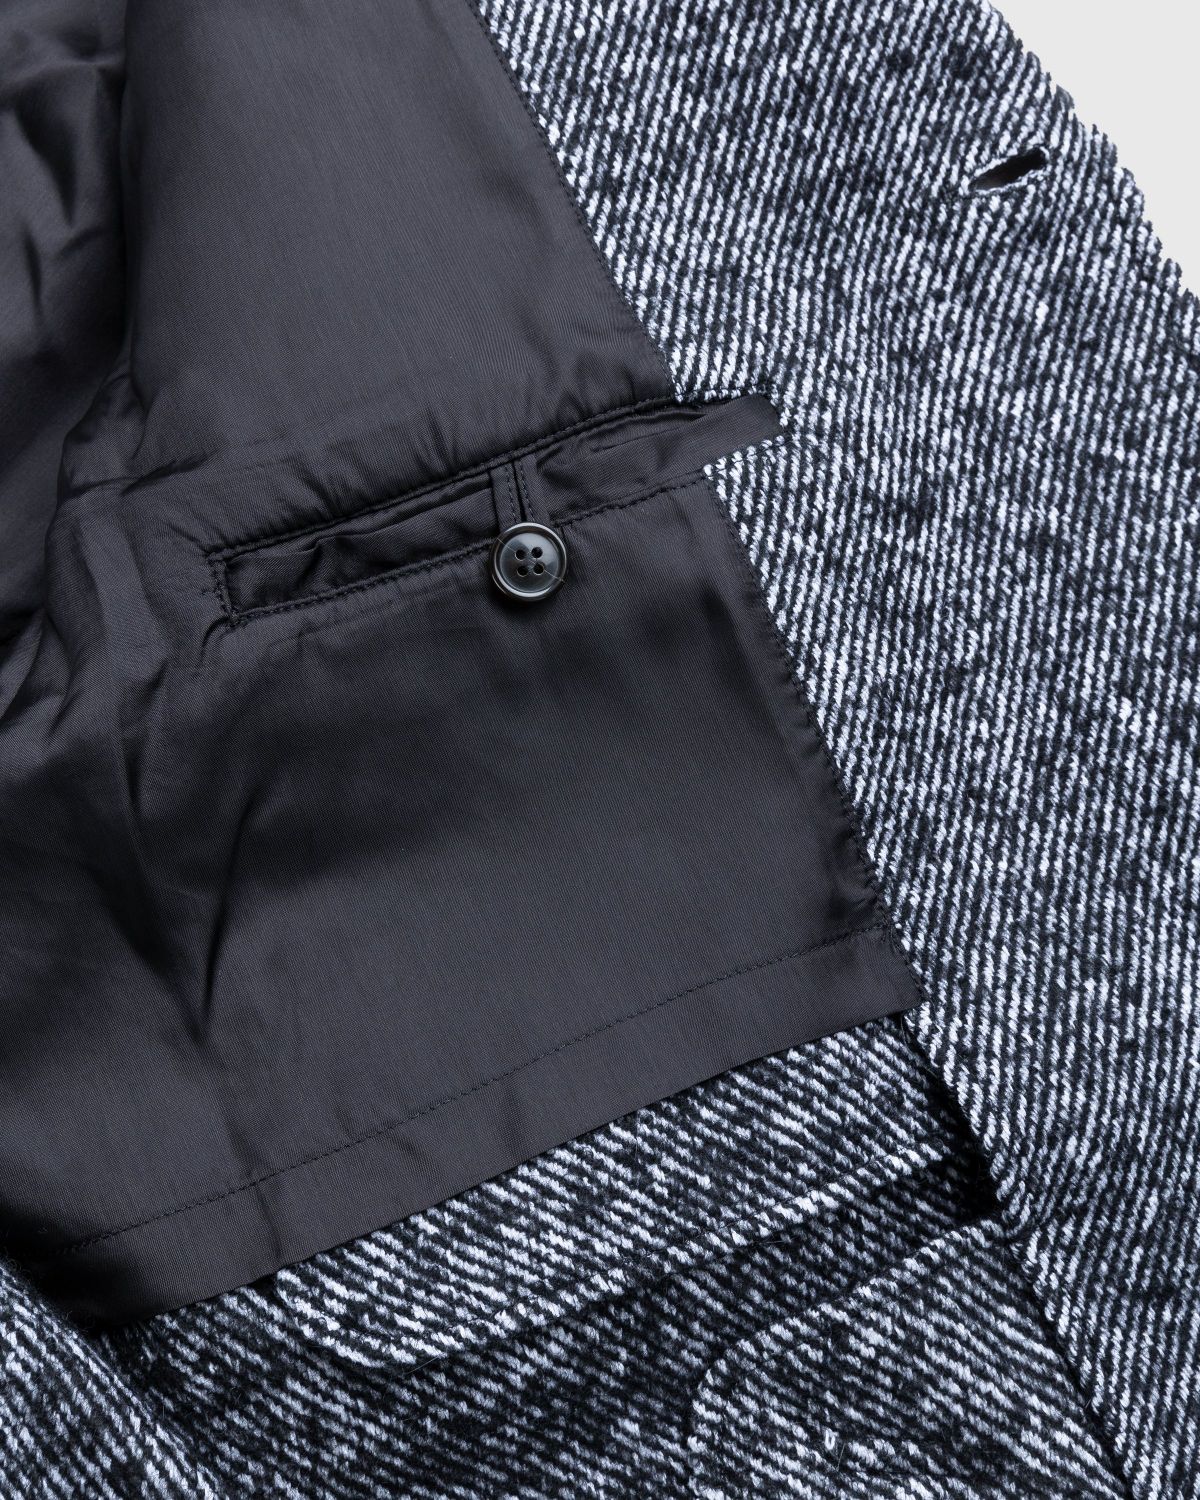 Kenzo – Coat Black - Trench Coats - Black - Image 5